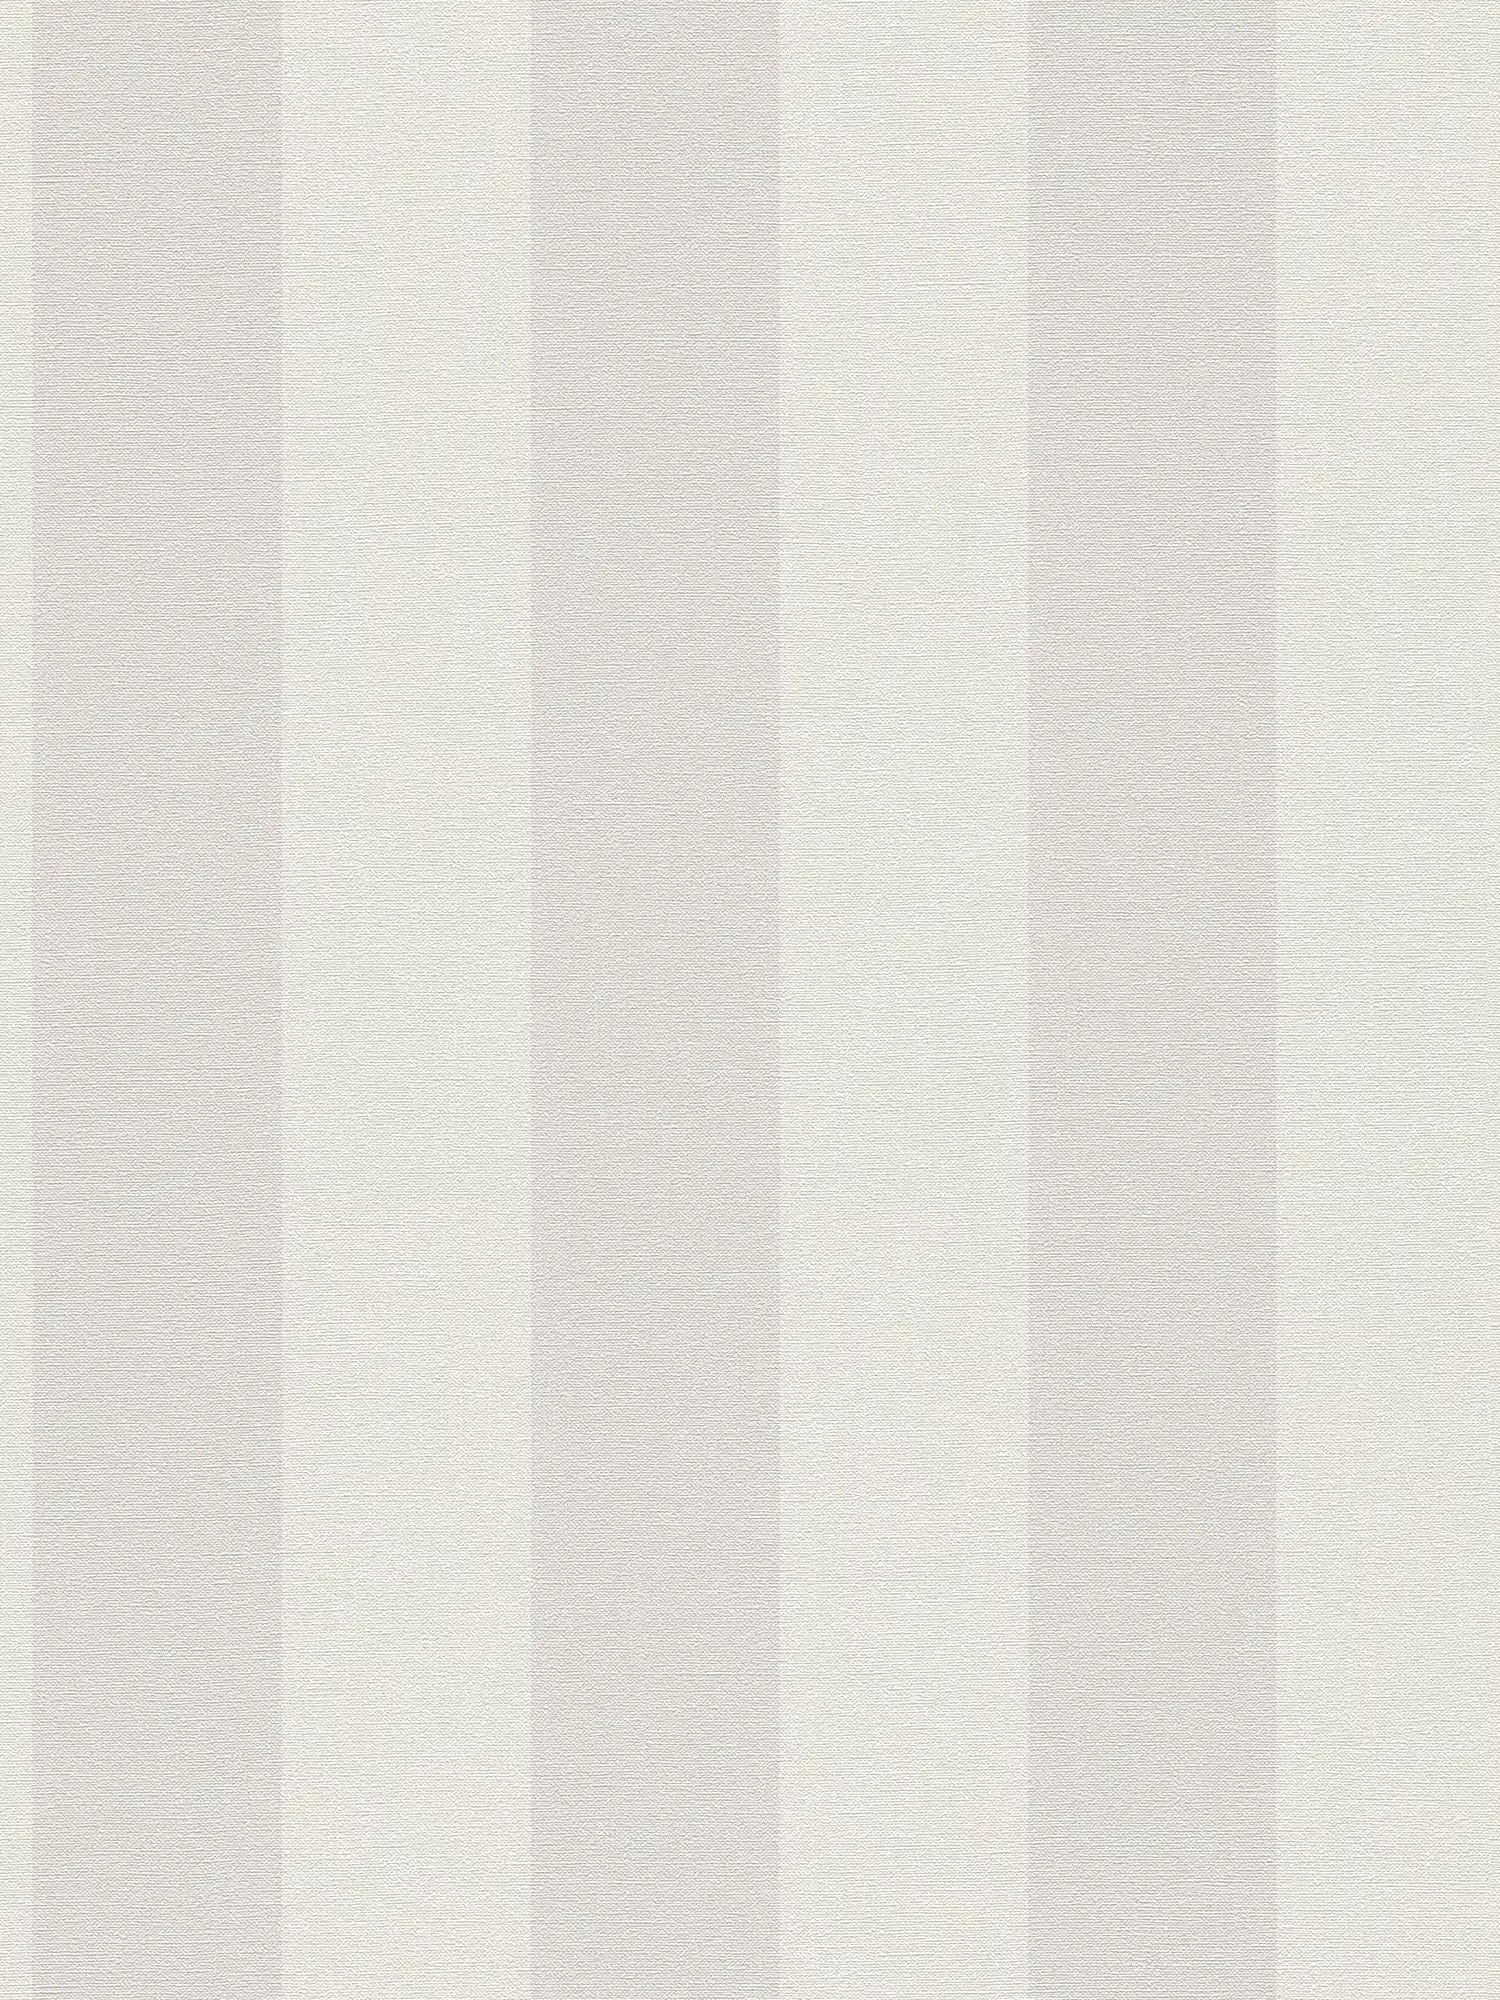 Streifen Vliestapete mit Leinenoptik PVC-frei – Grau, Weiß
